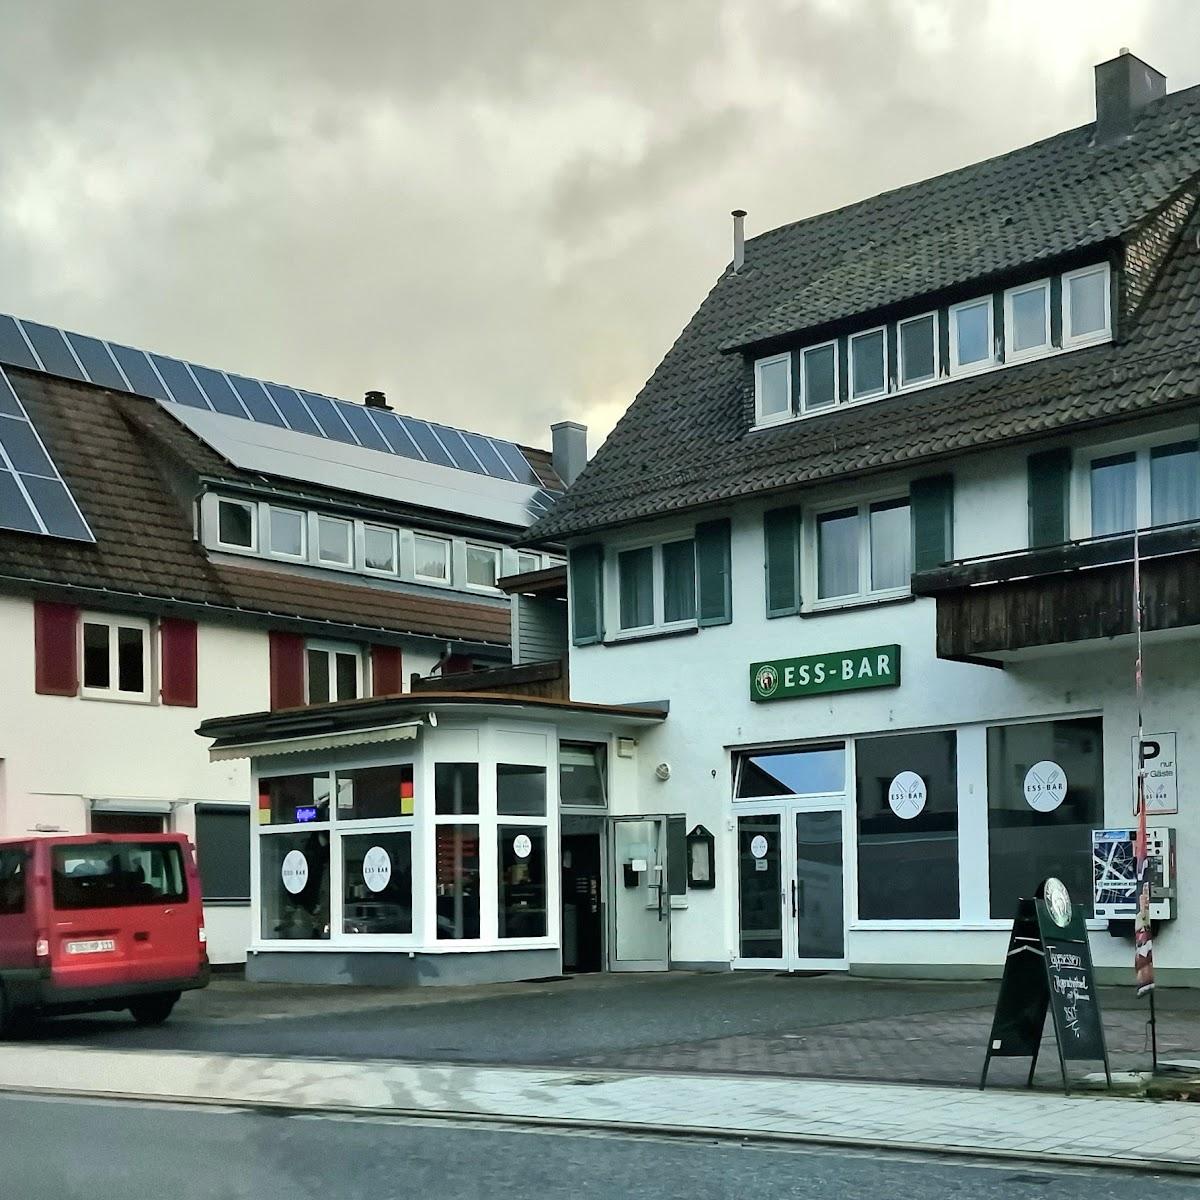 Restaurant "ESS-BAR" in Baiersbronn